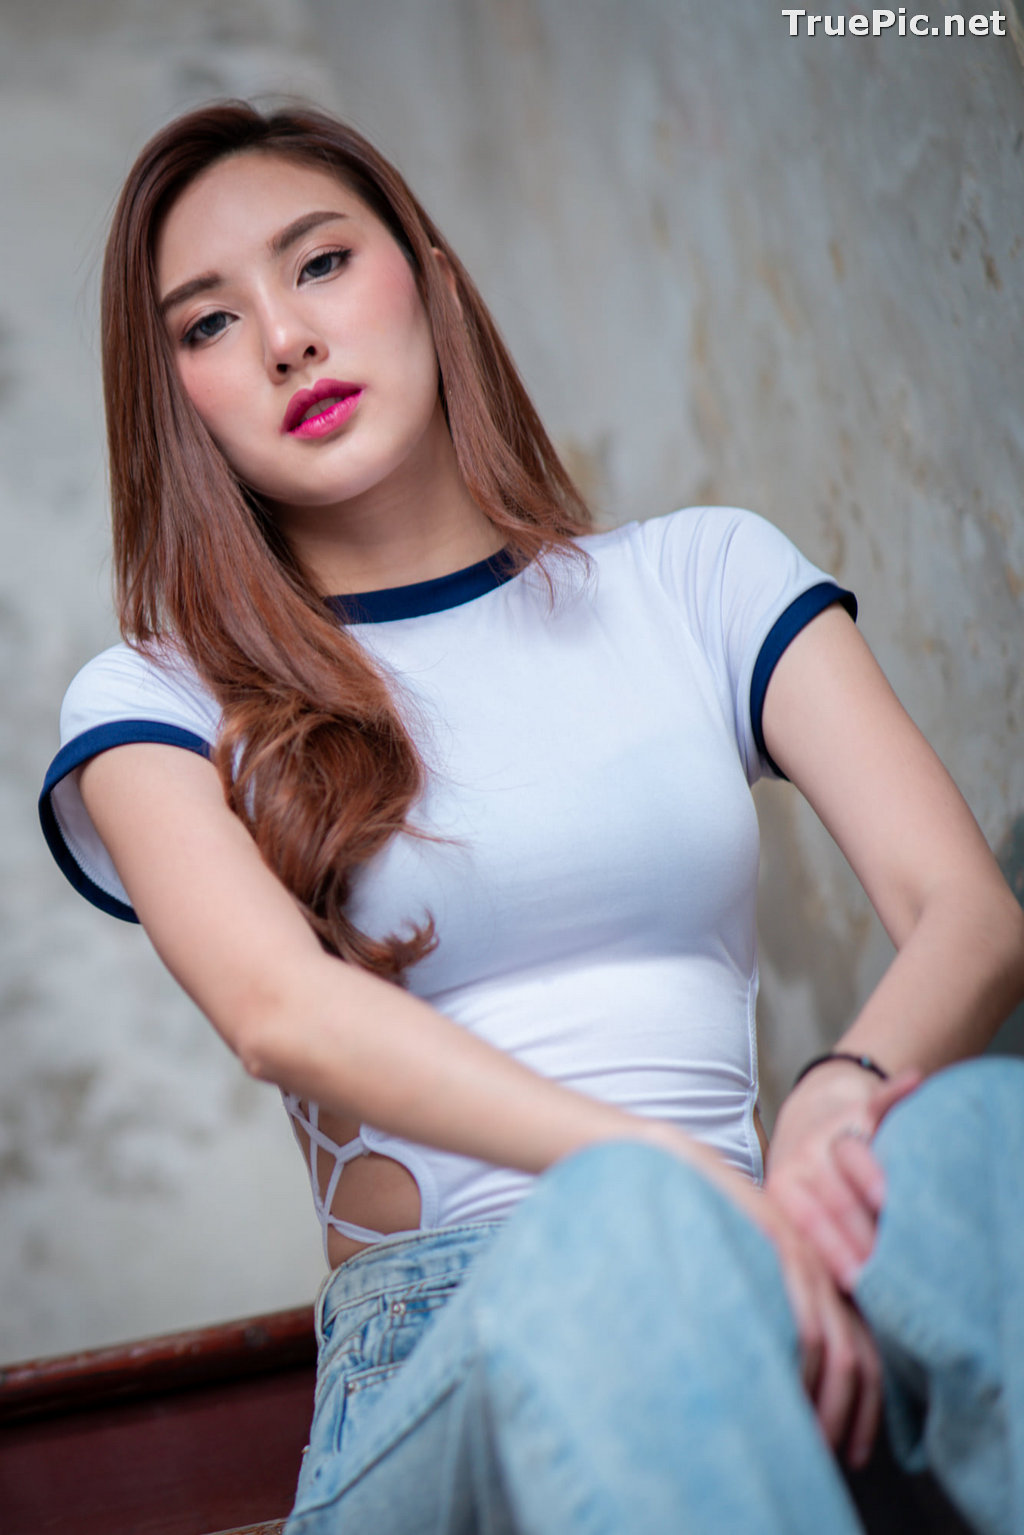 Image Thailand Model - Mynn Sriratampai (Mynn) - Beautiful Picture 2021 Collection - TruePic.net - Picture-27